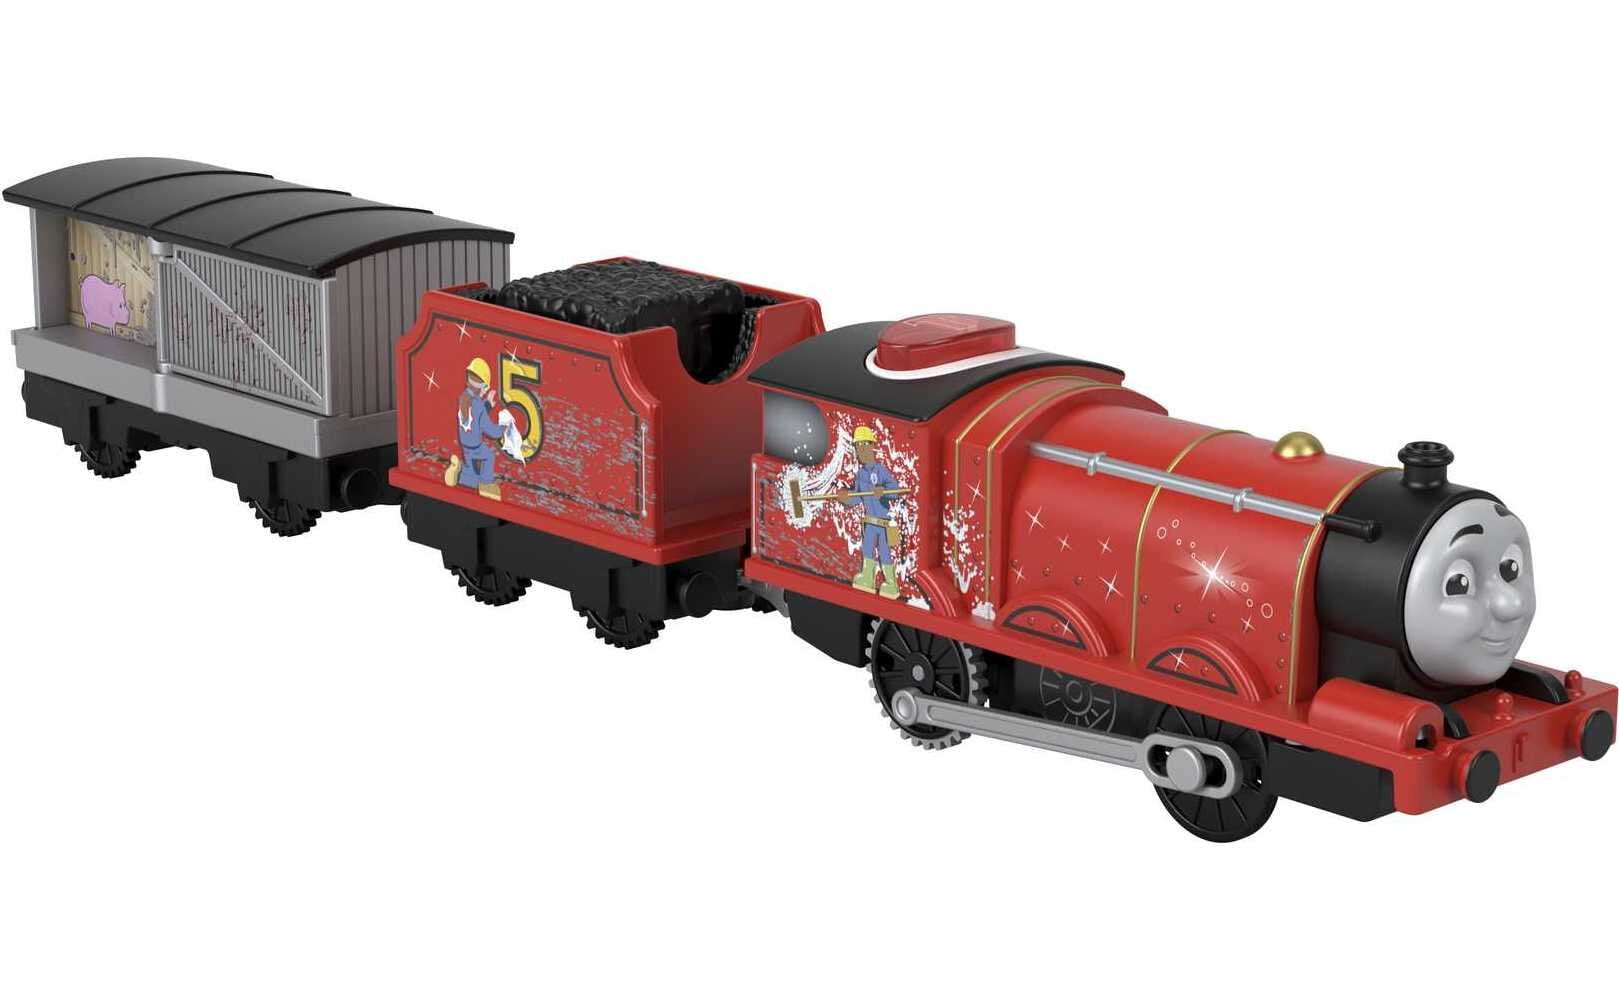 Thomas & Friends James Motorized Toy Train